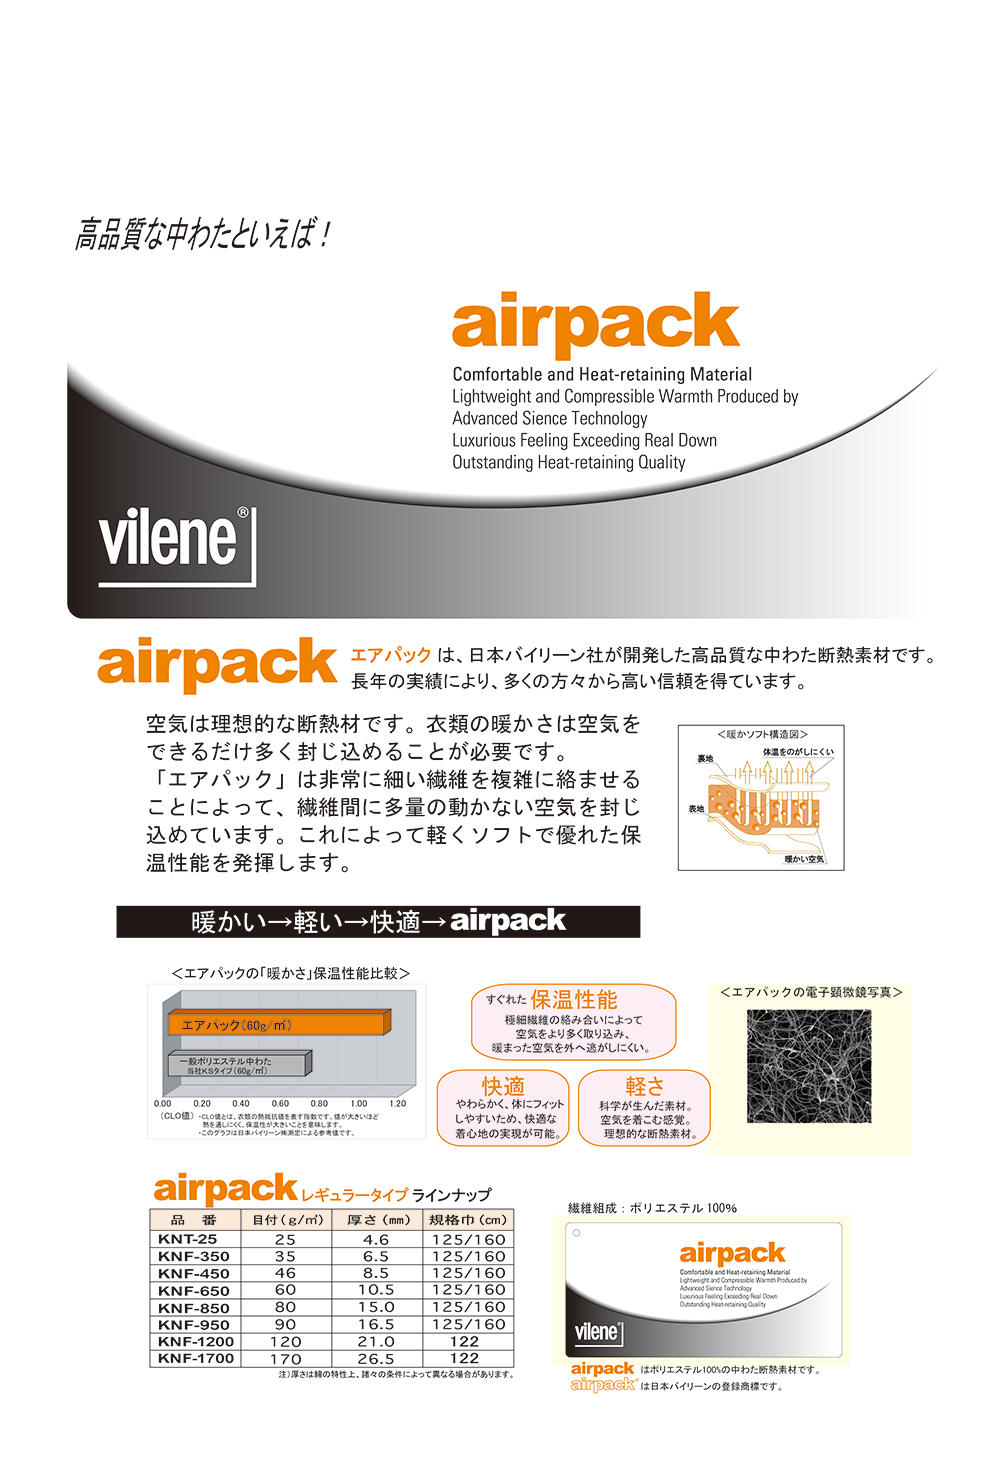 KNF650 Bông Chần Air Pack 60g[Xen Kẽ] Vilene (JAPAN Vilene Mật)